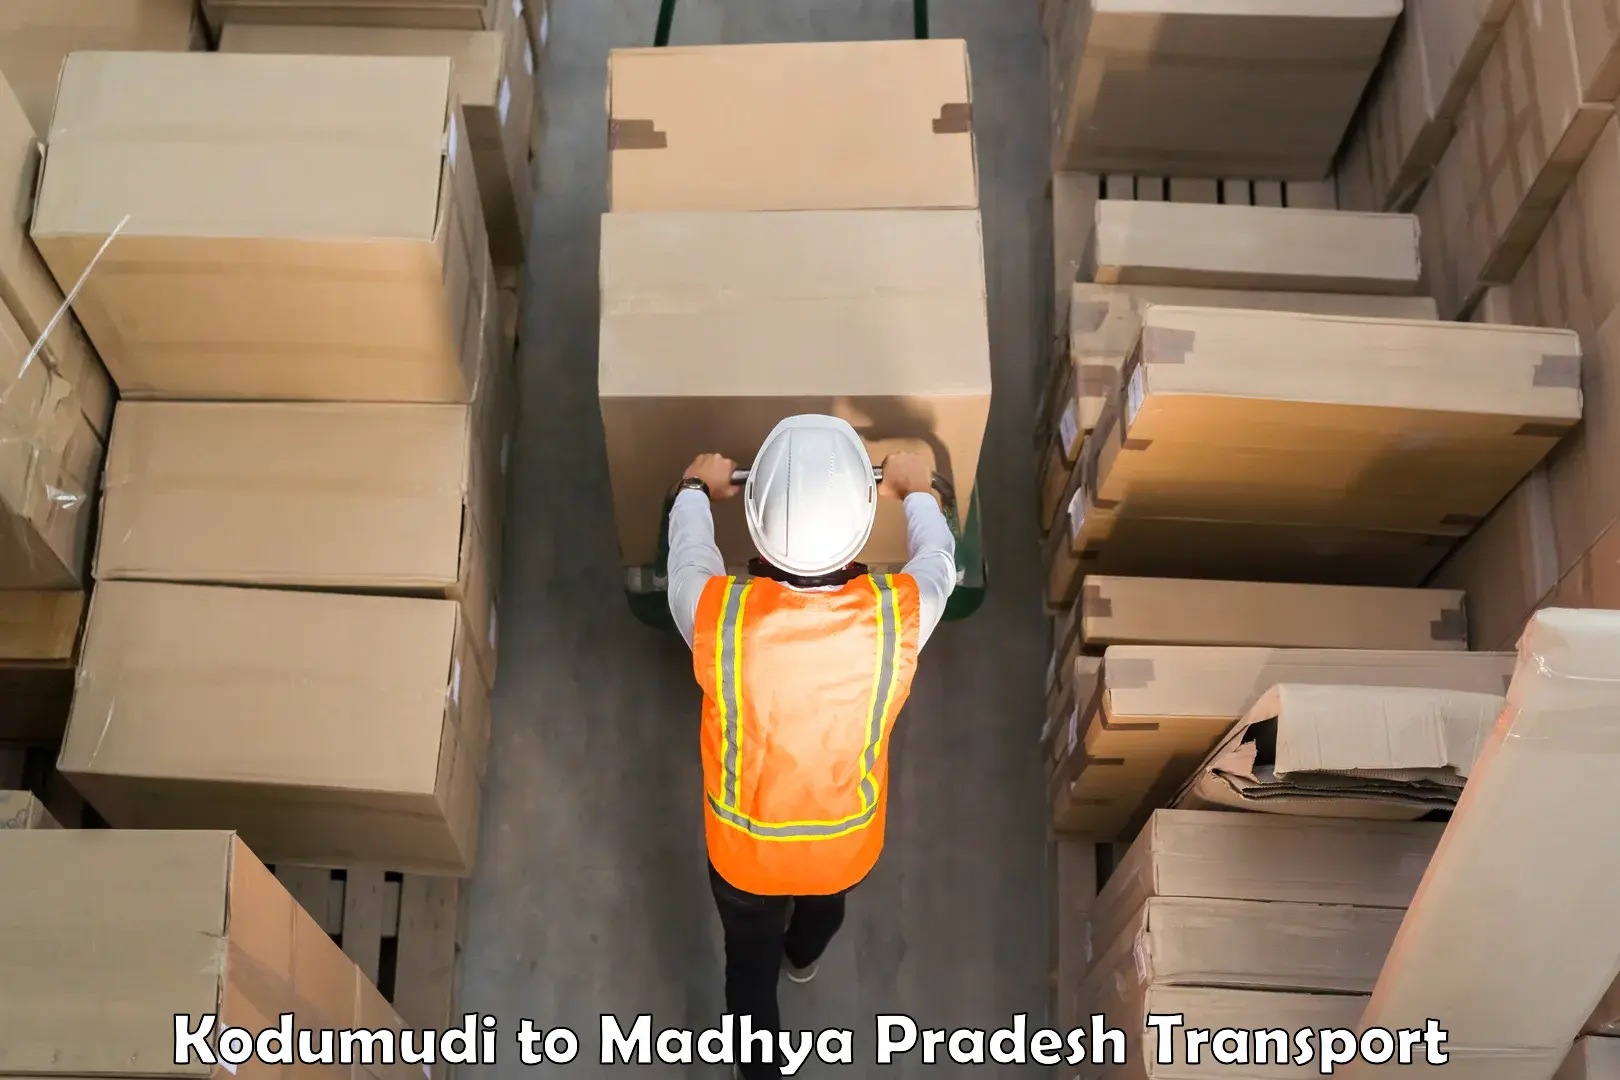 Truck transport companies in India Kodumudi to Lavkush Nagar